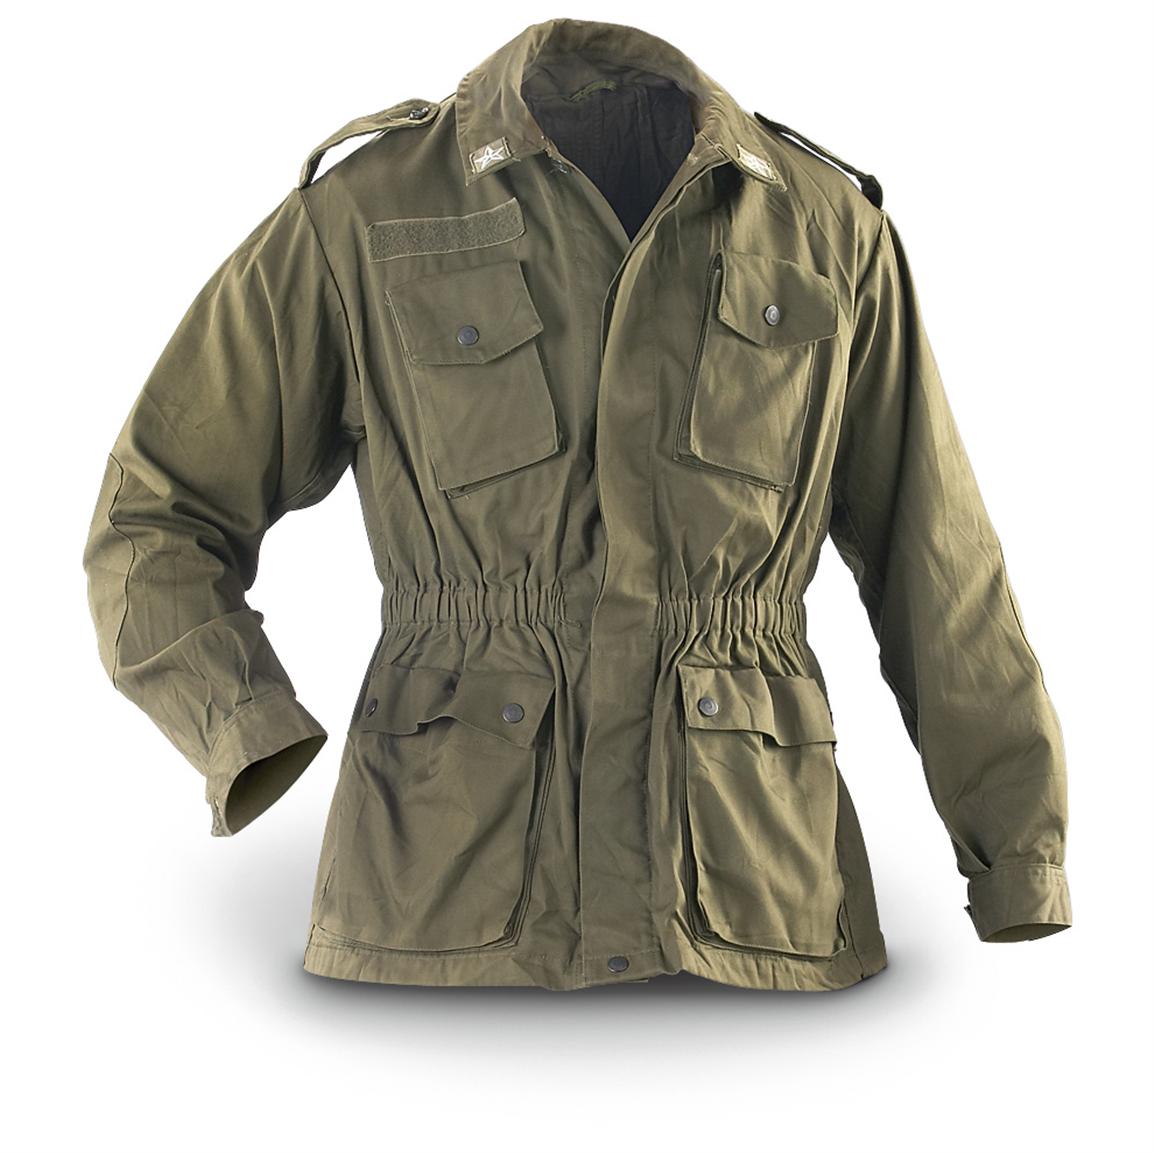 Italian Military Surplus Olive Drab Combat Jacket